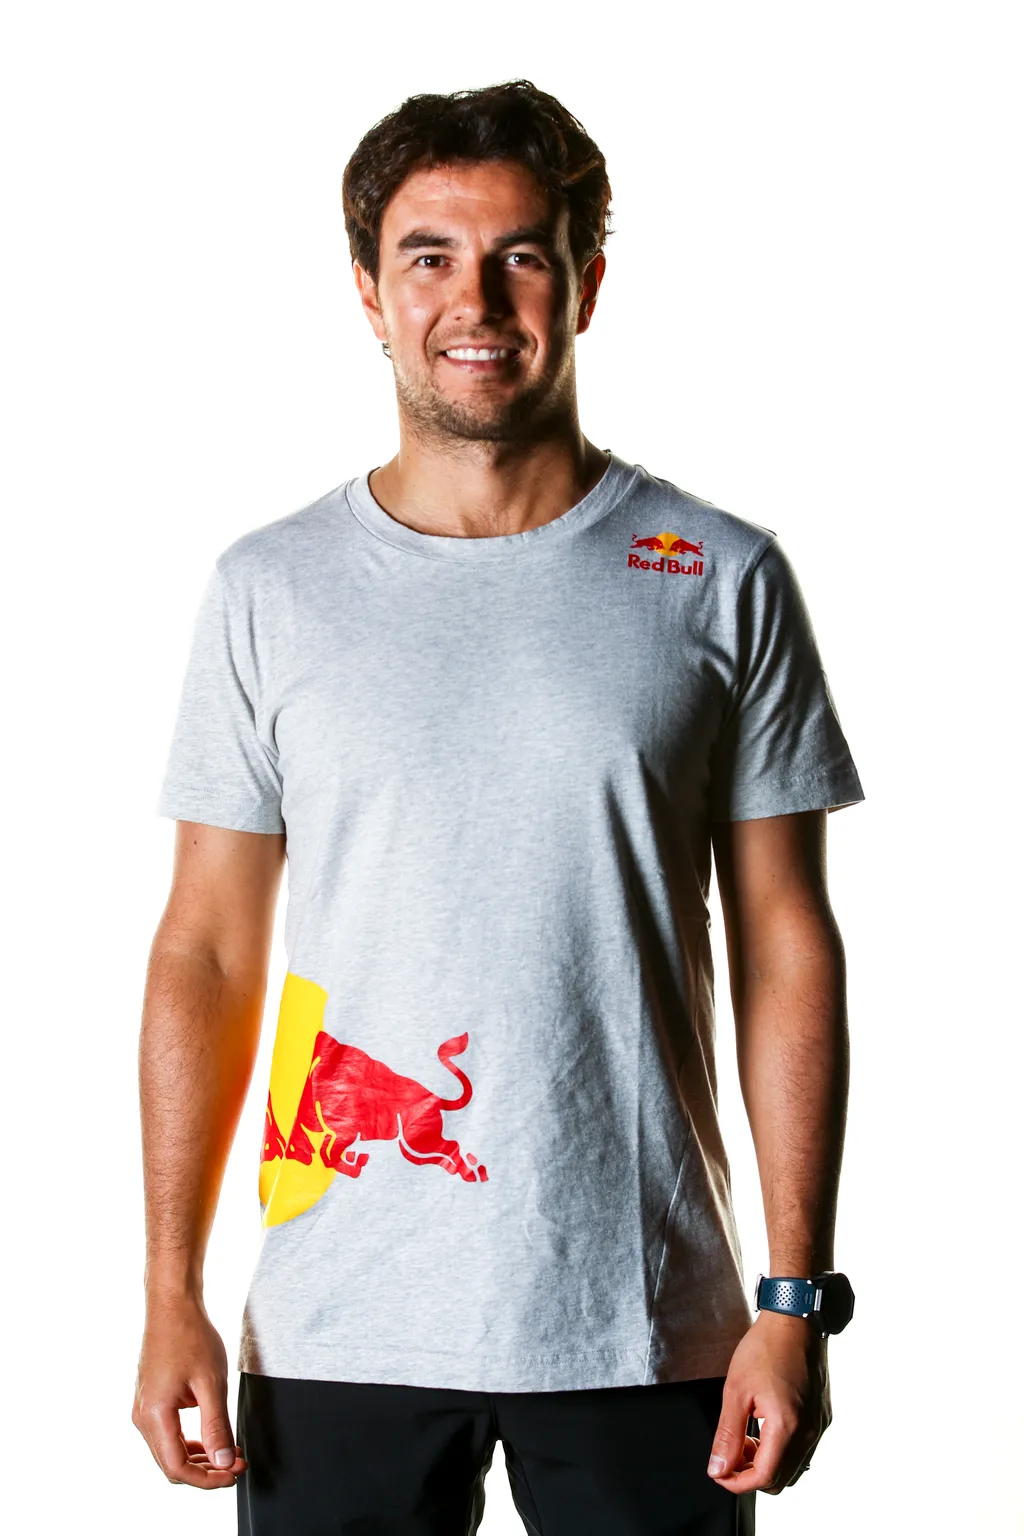 Forma-1, Sergio Pérez, Red Bull Racing 